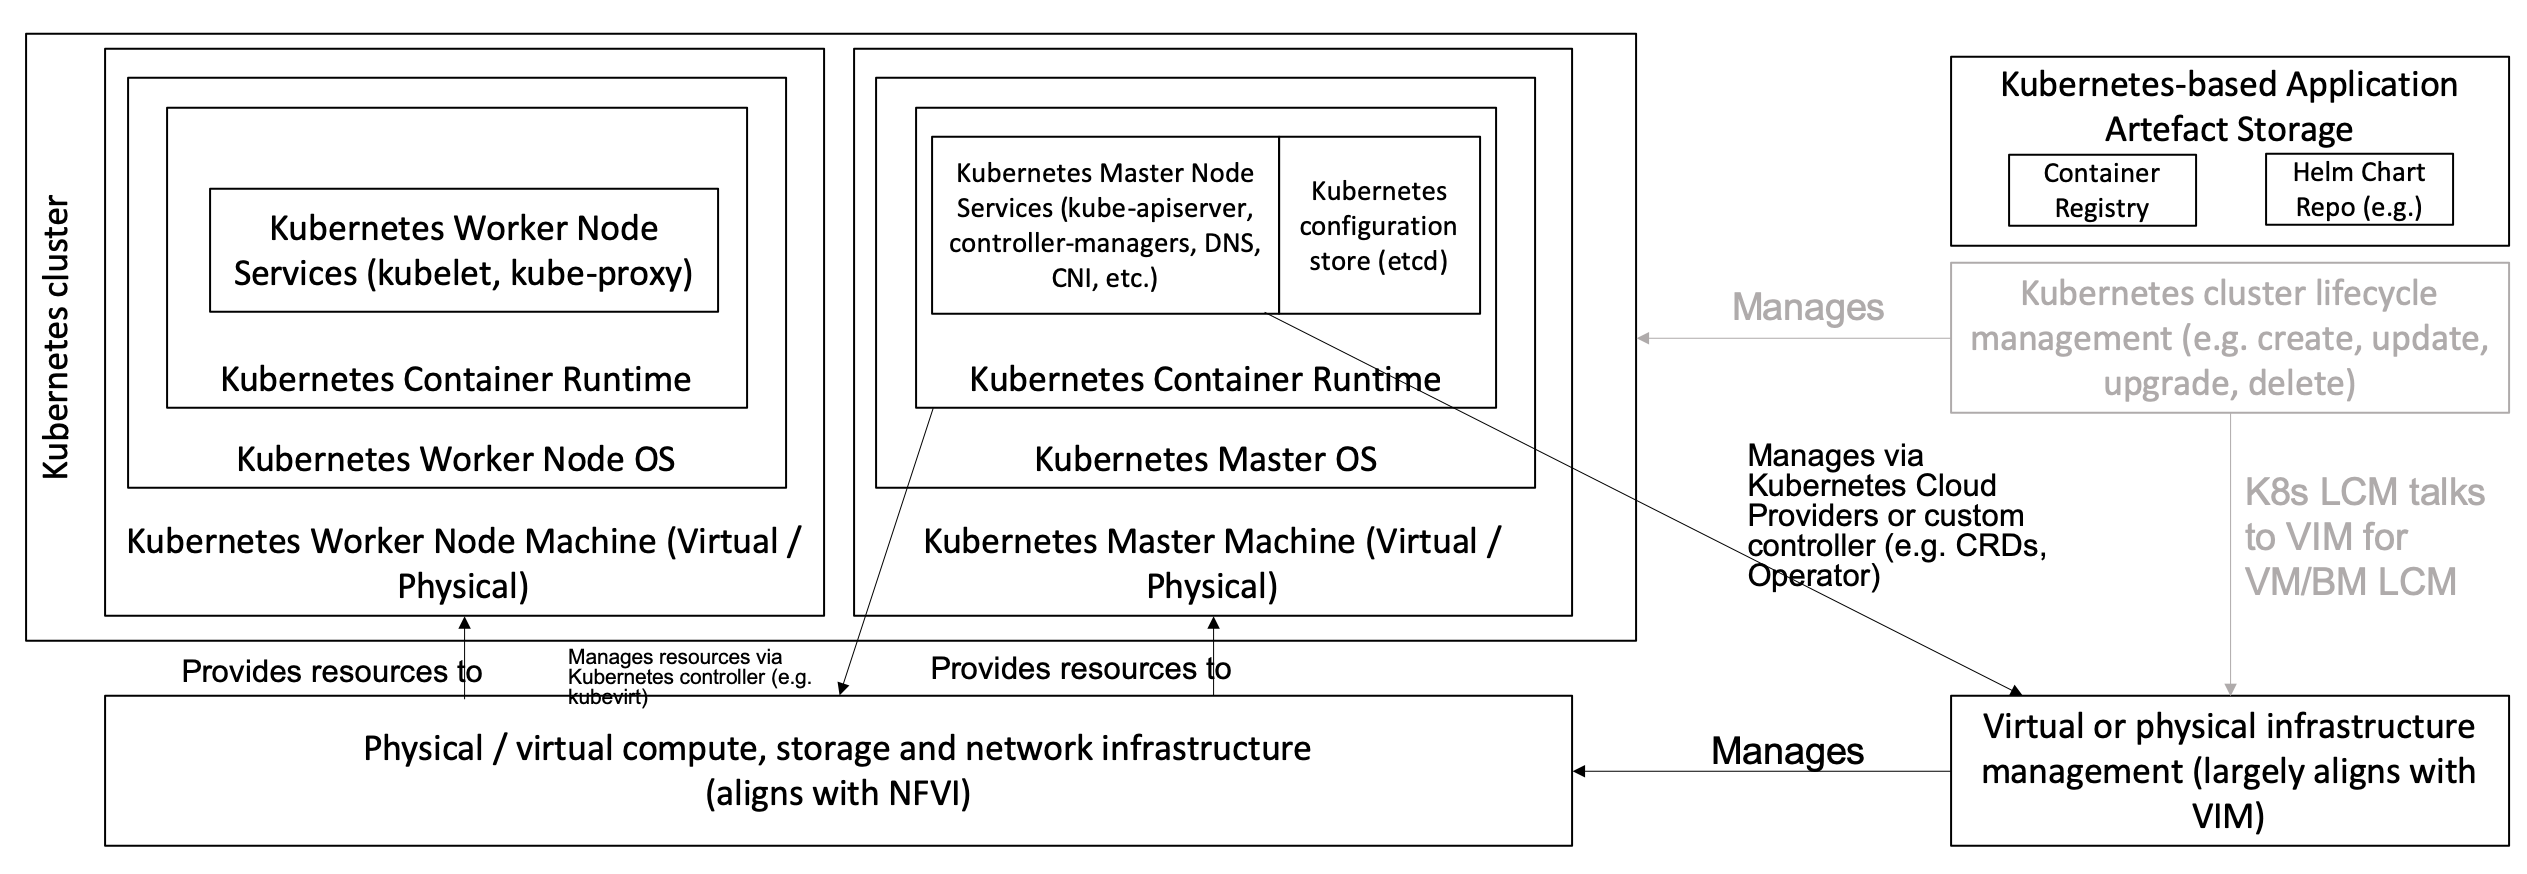 Kubernetes Reference Architecture